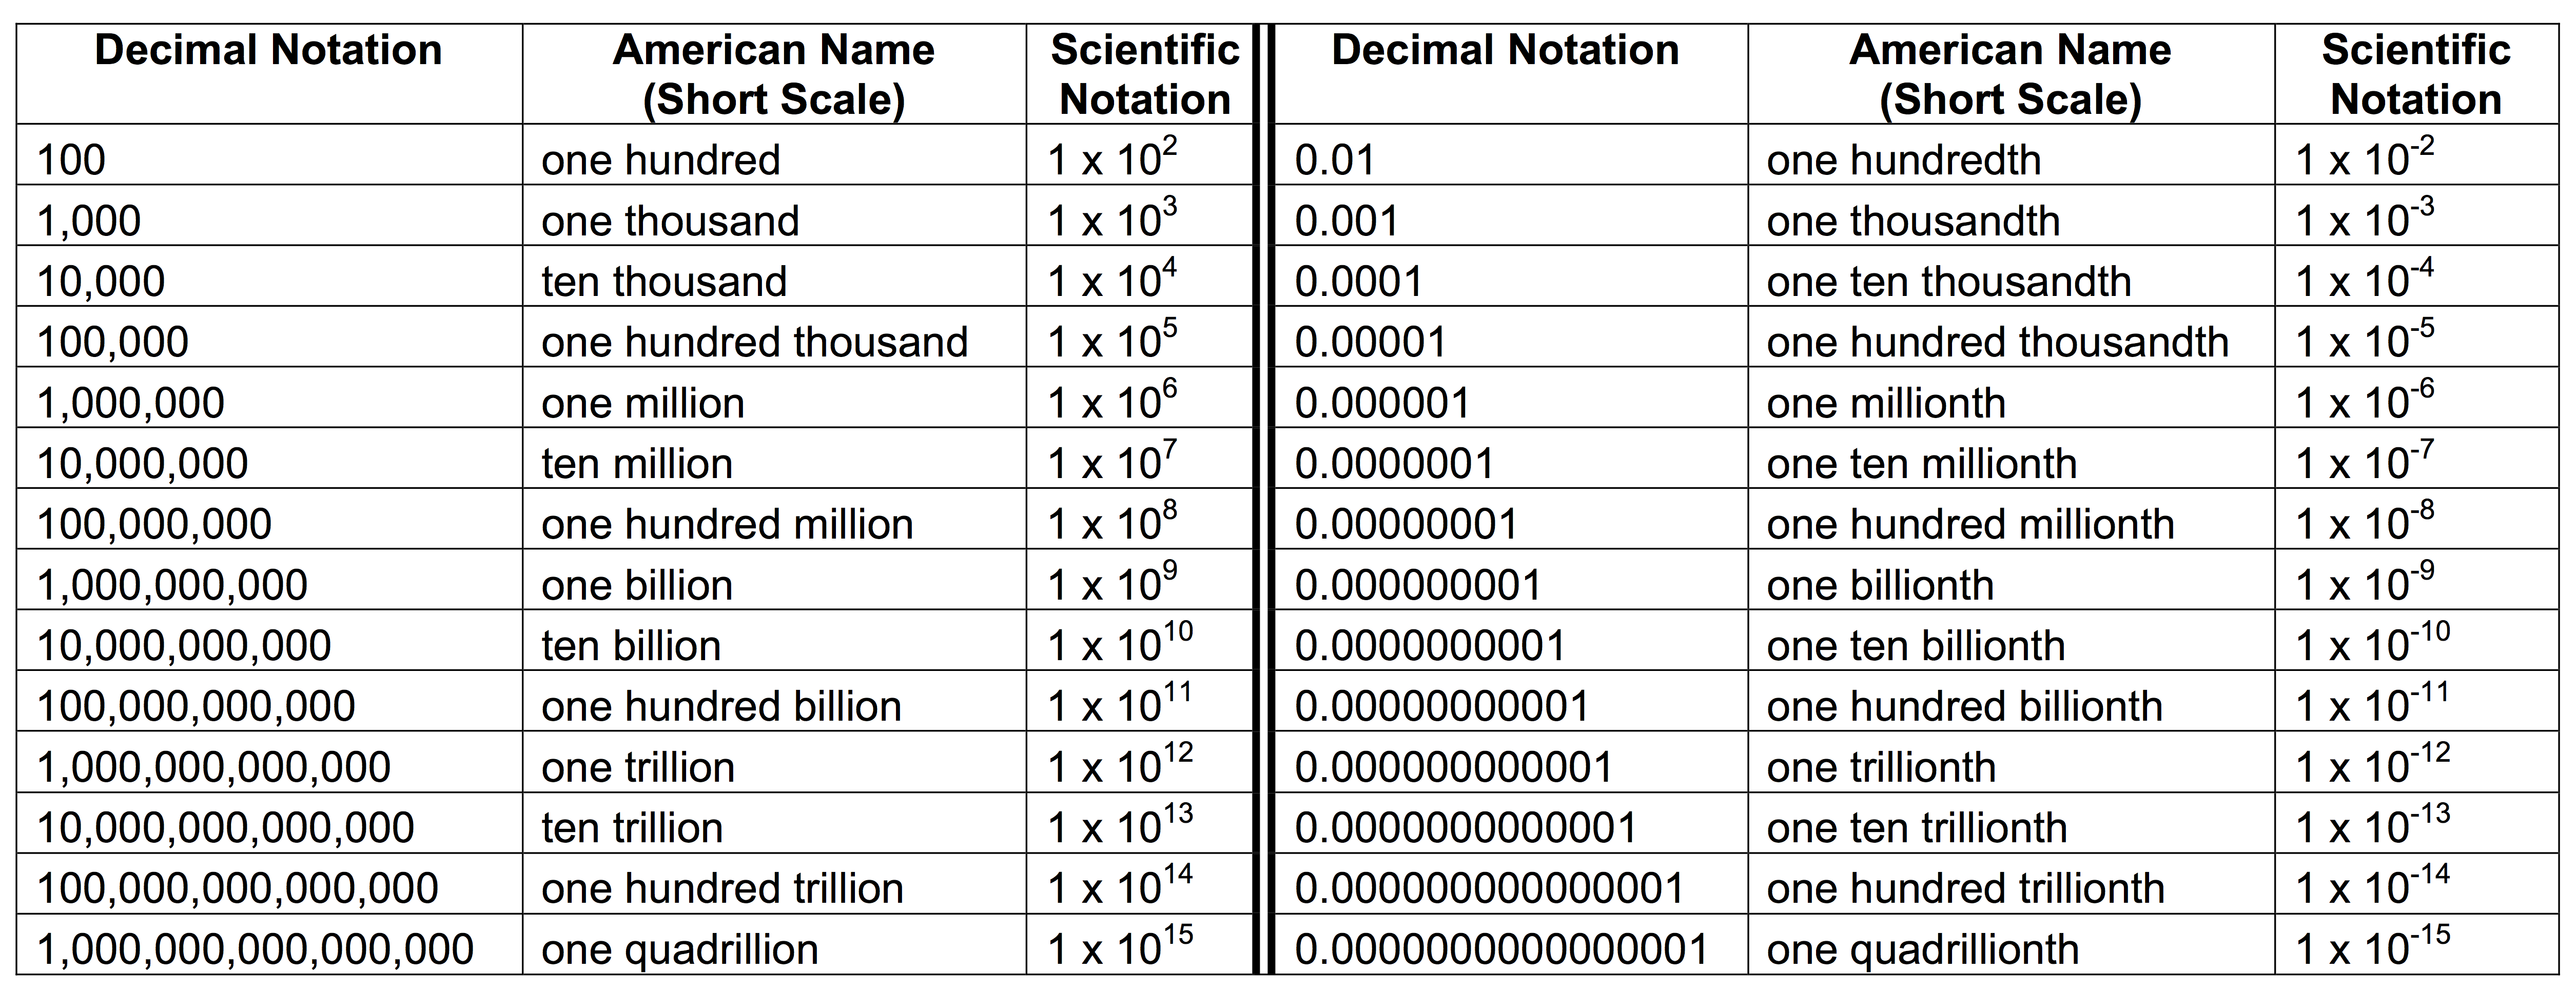 scientific-notation